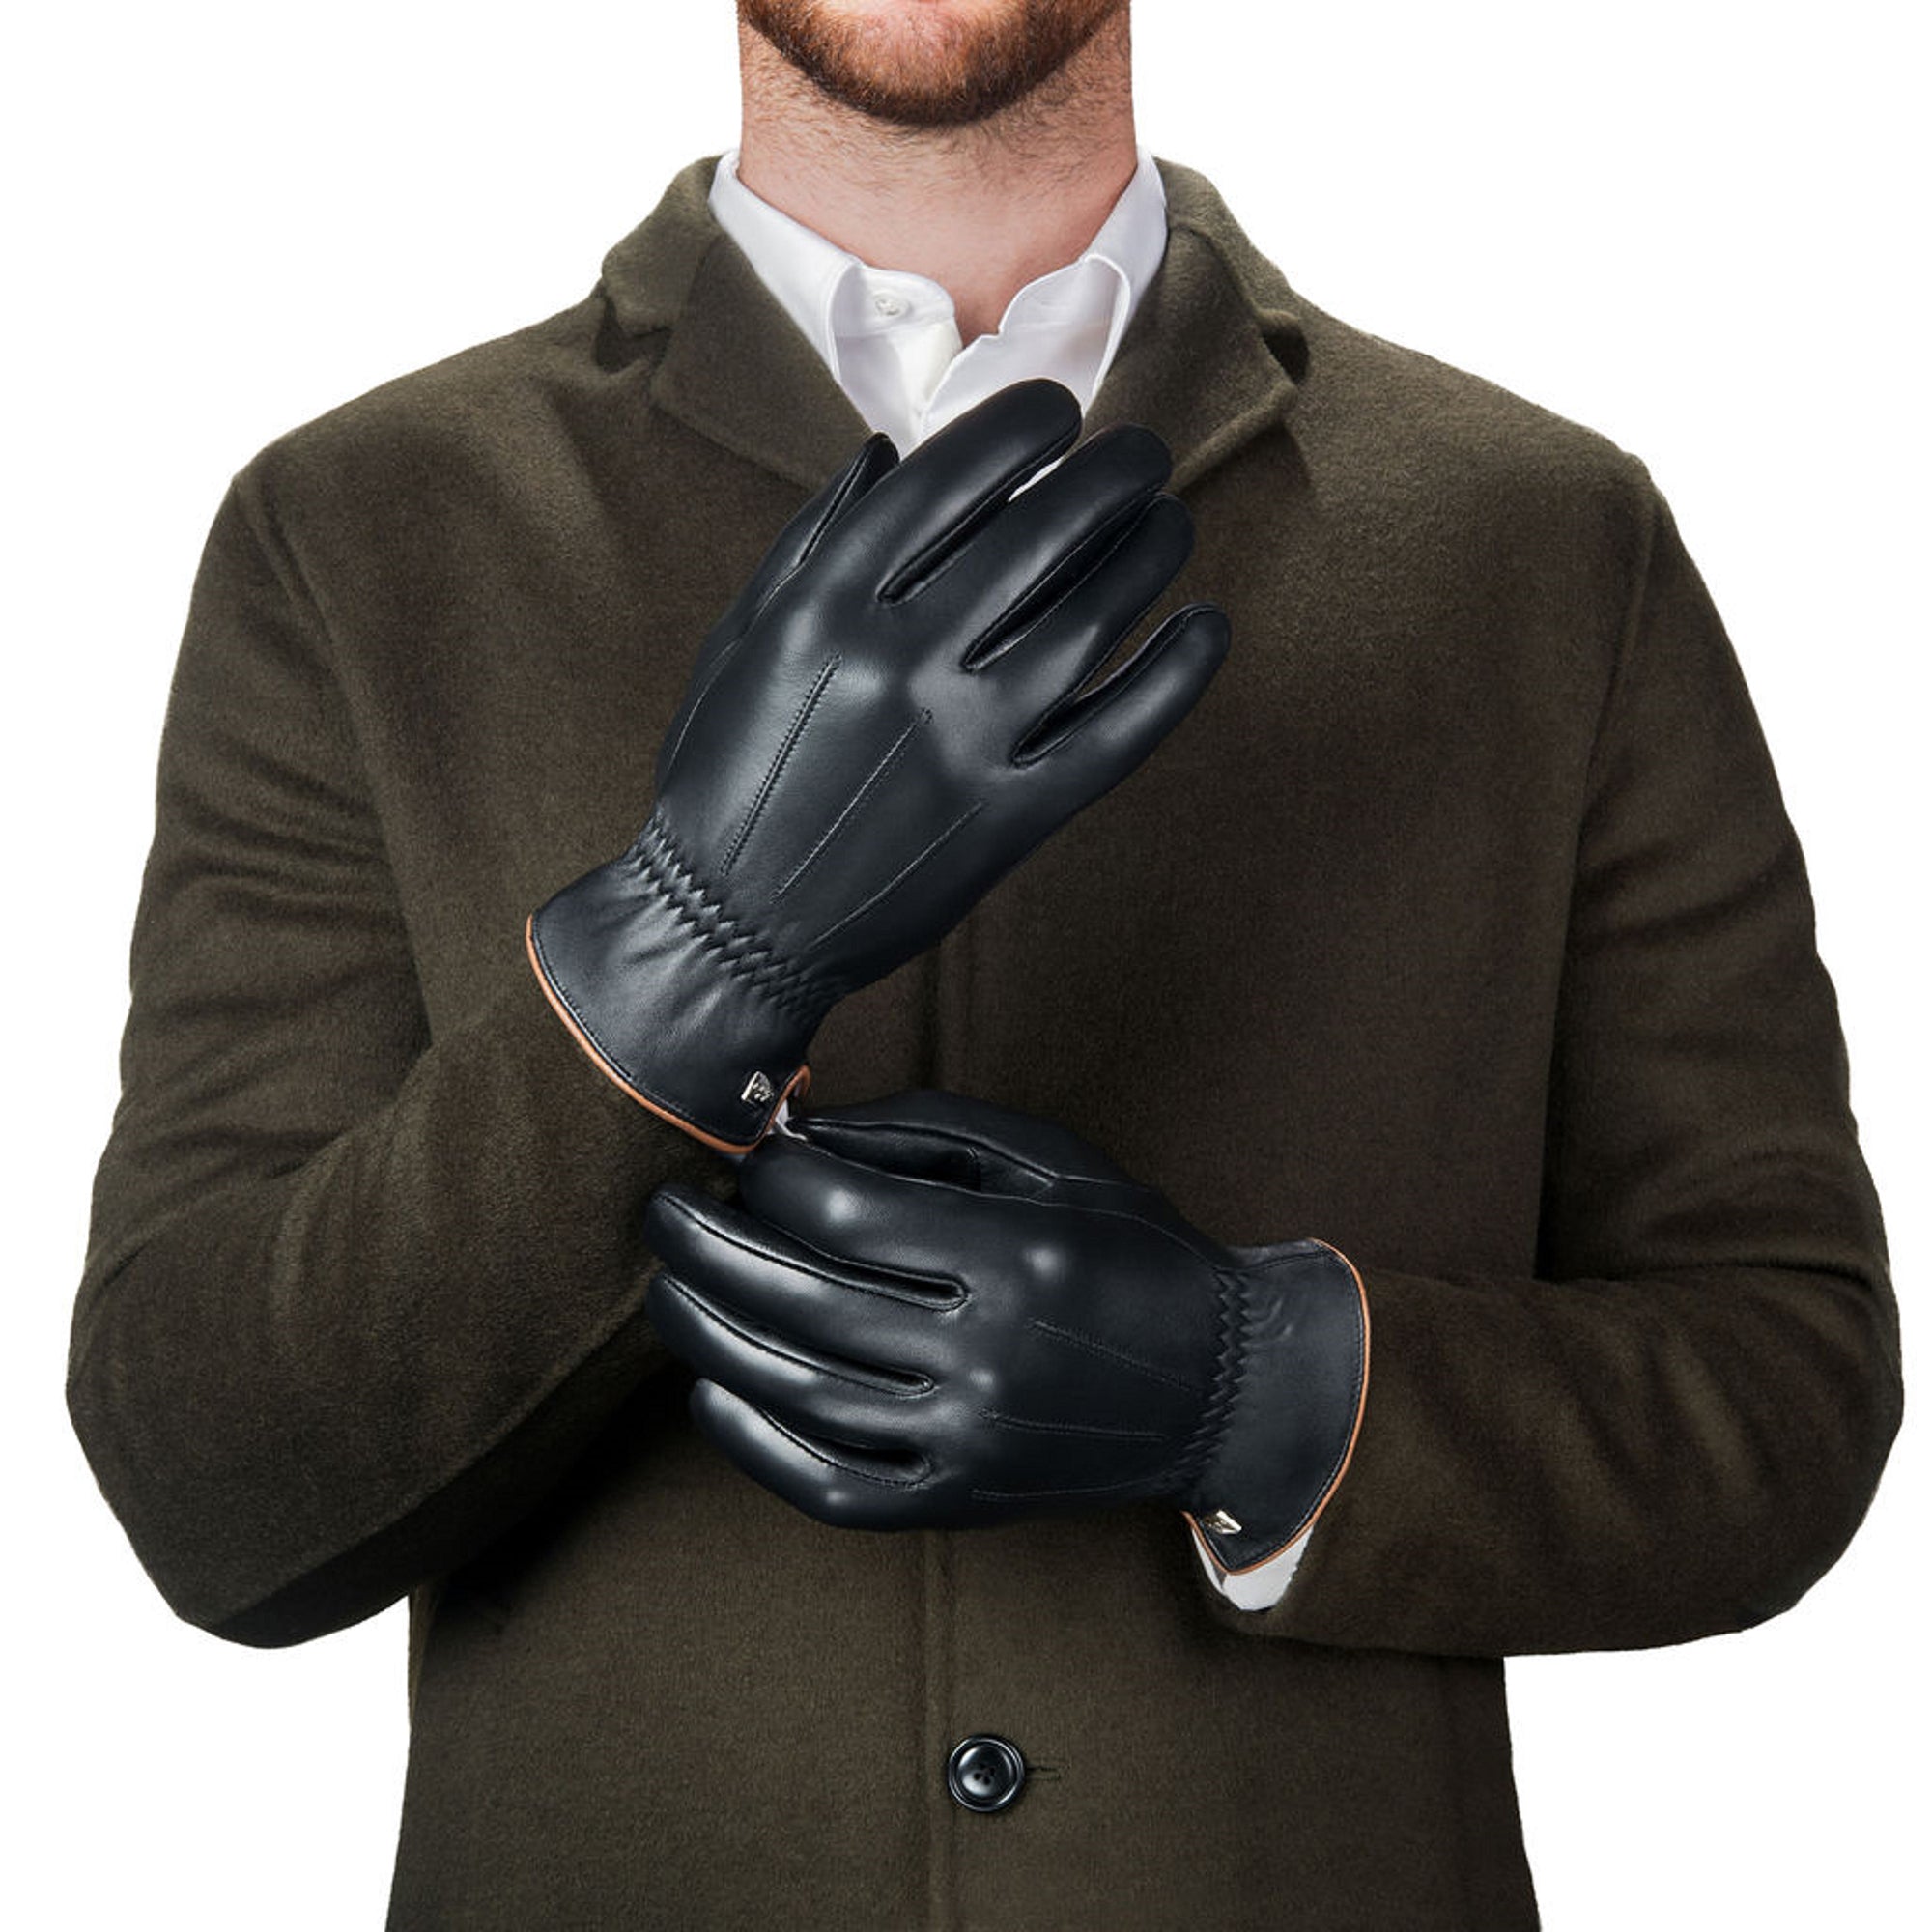 10 Best Leather Gloves for Men